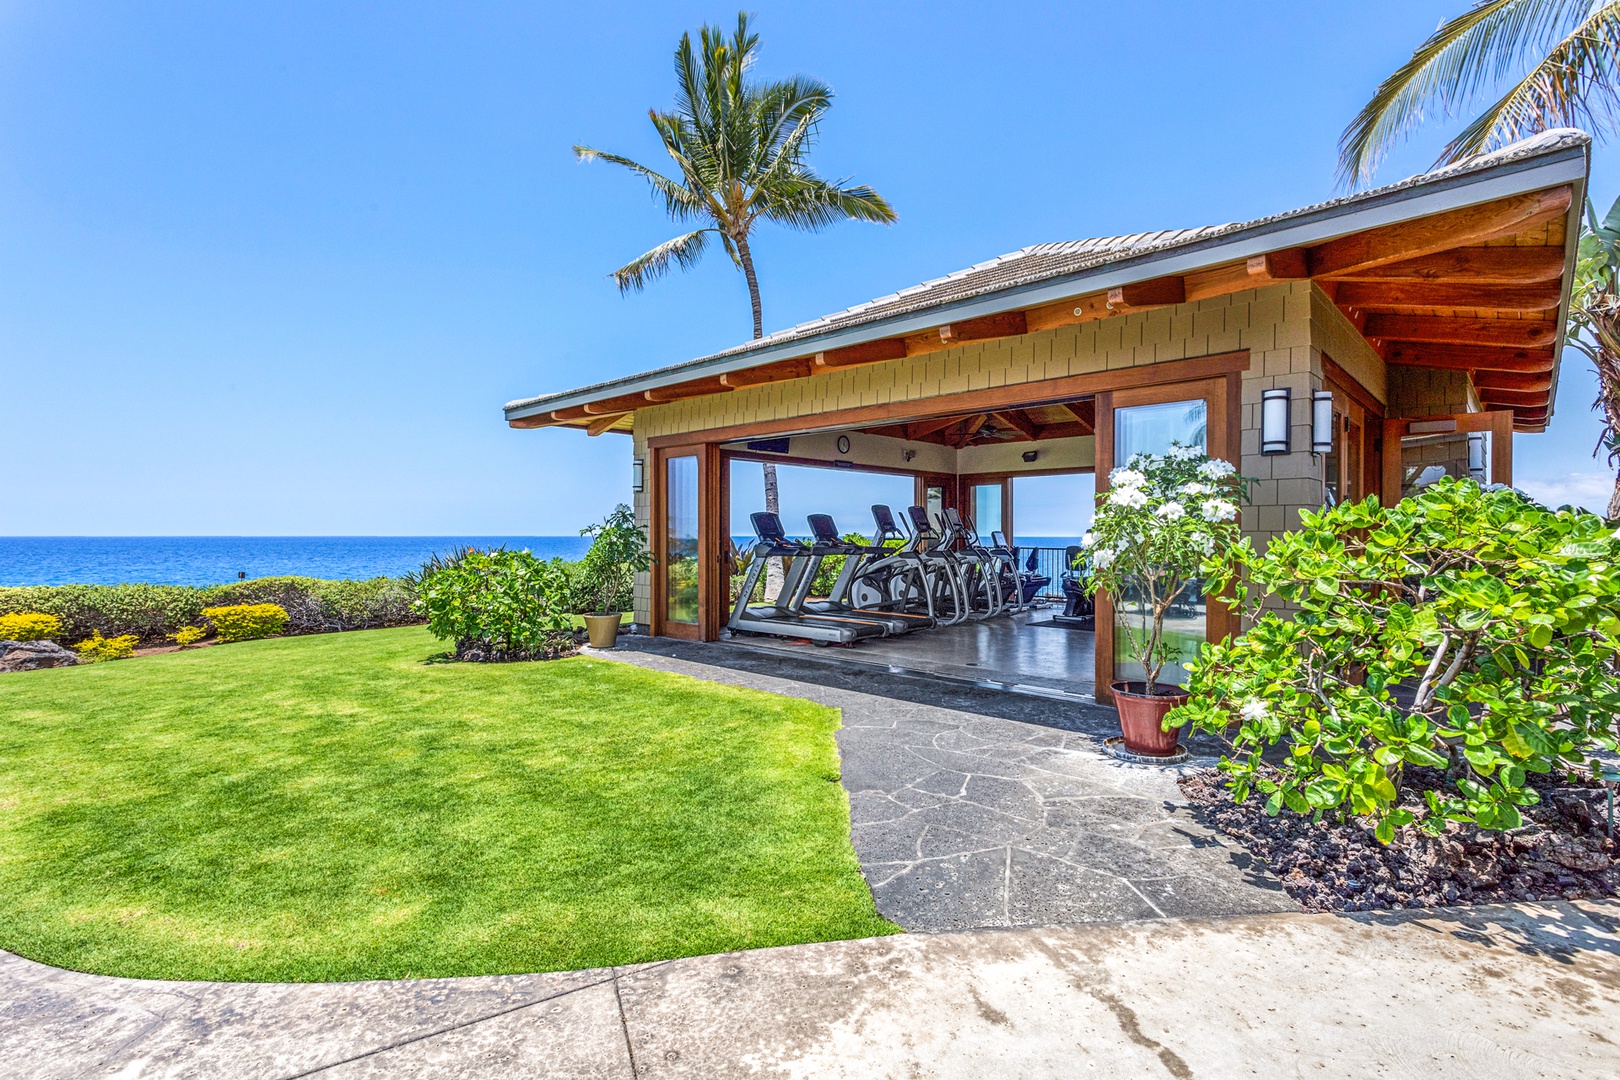 Waikoloa Vacation Rentals, 2BD Hali'i Kai (12C) at Waikoloa Resort - Hali’i Kai’s epic open air fitness center with panoramic ocean and coastline views.